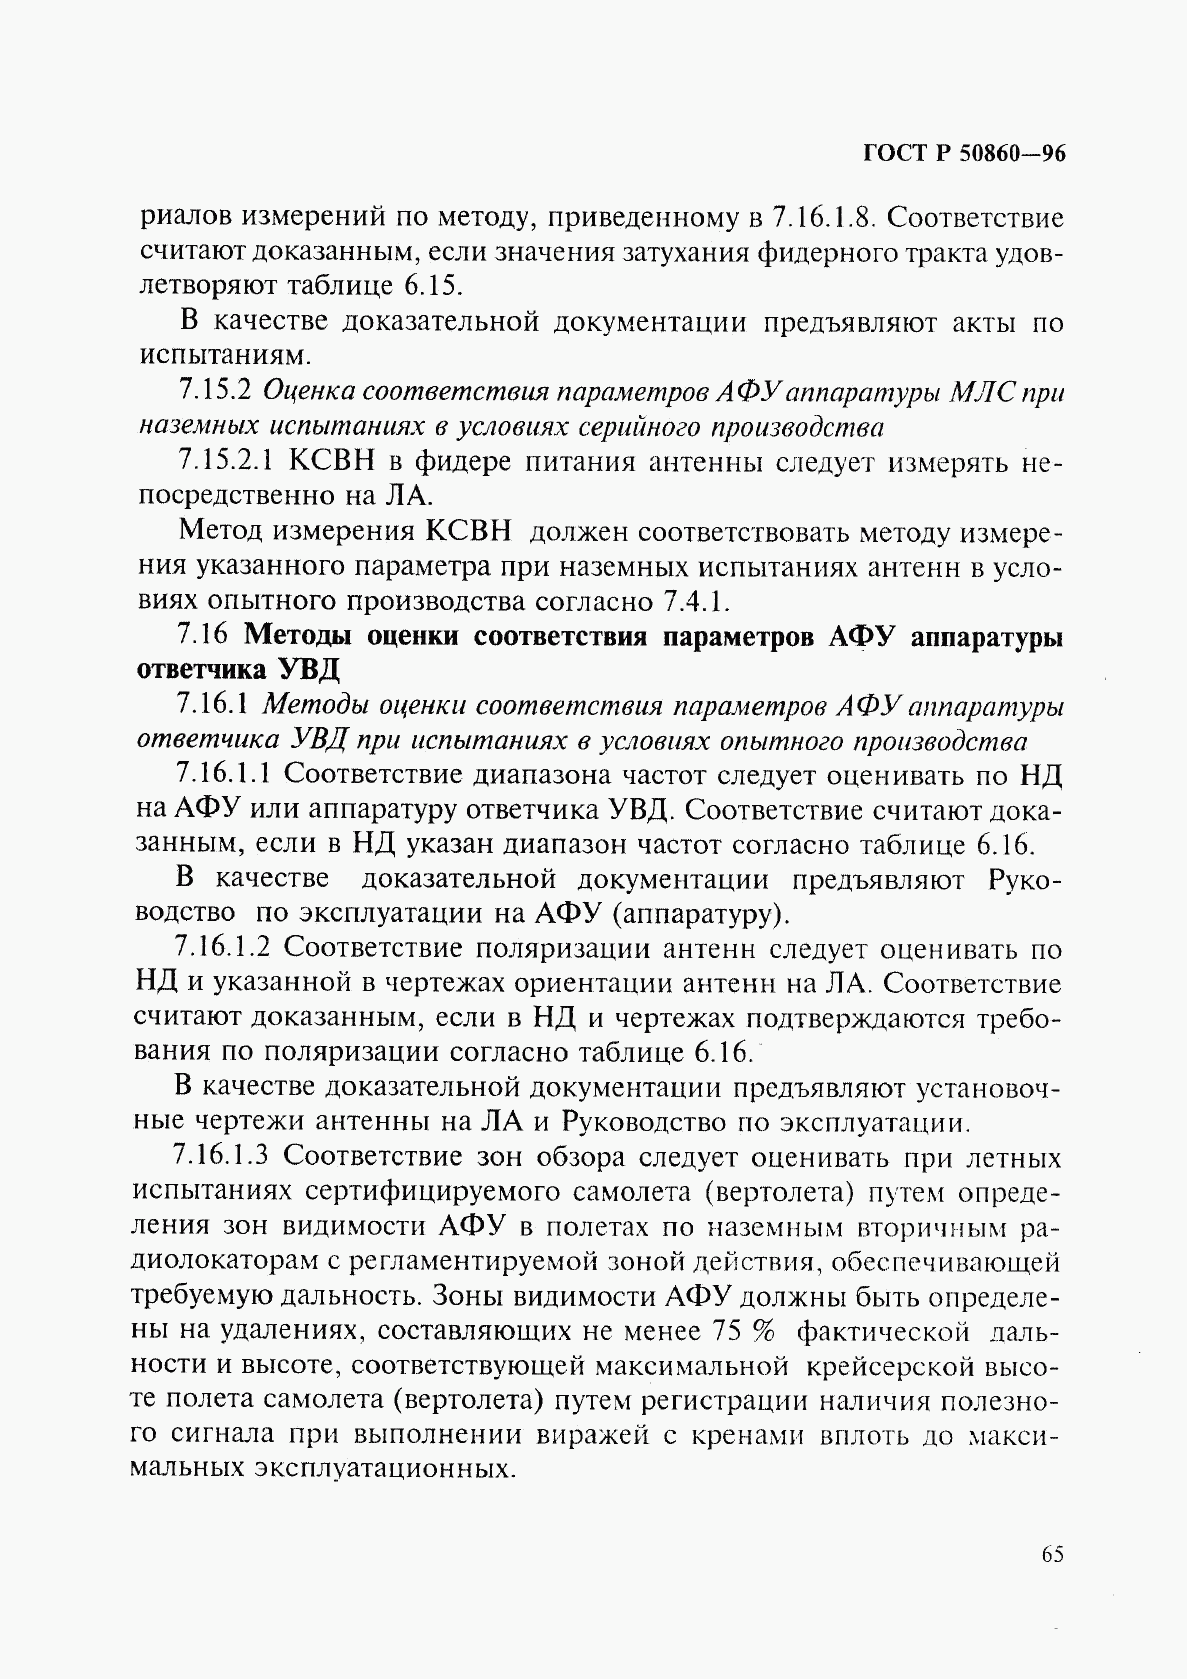 ГОСТ Р 50860-96, страница 70